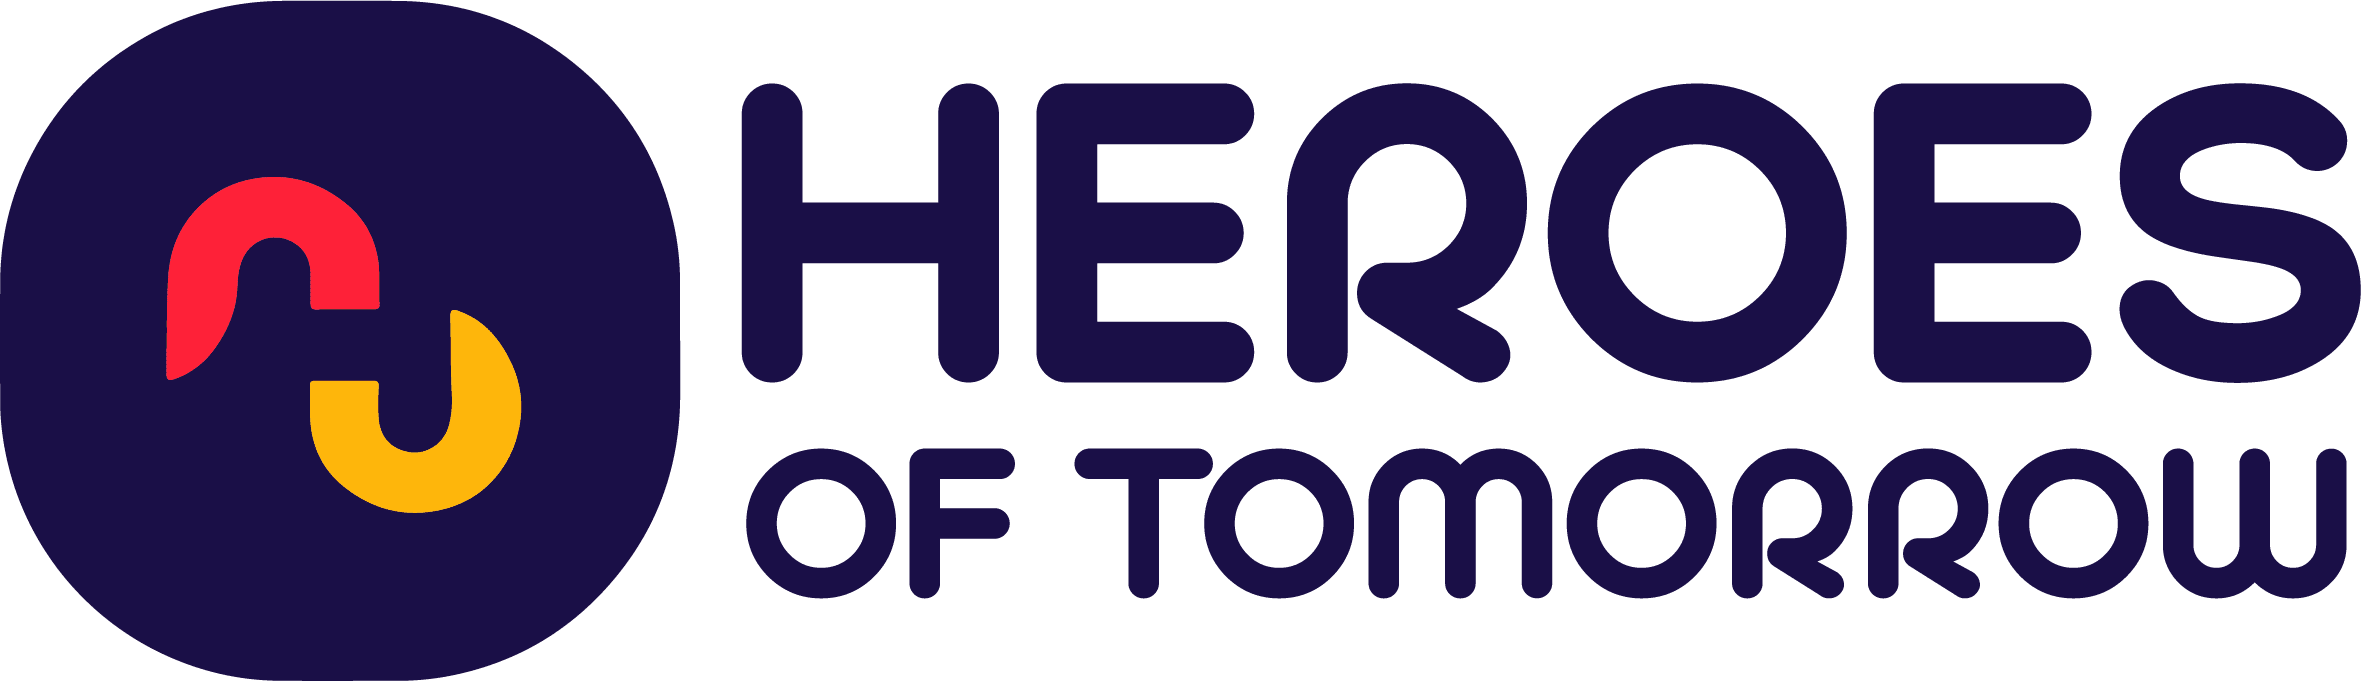 Heroes of Tomorrow logo